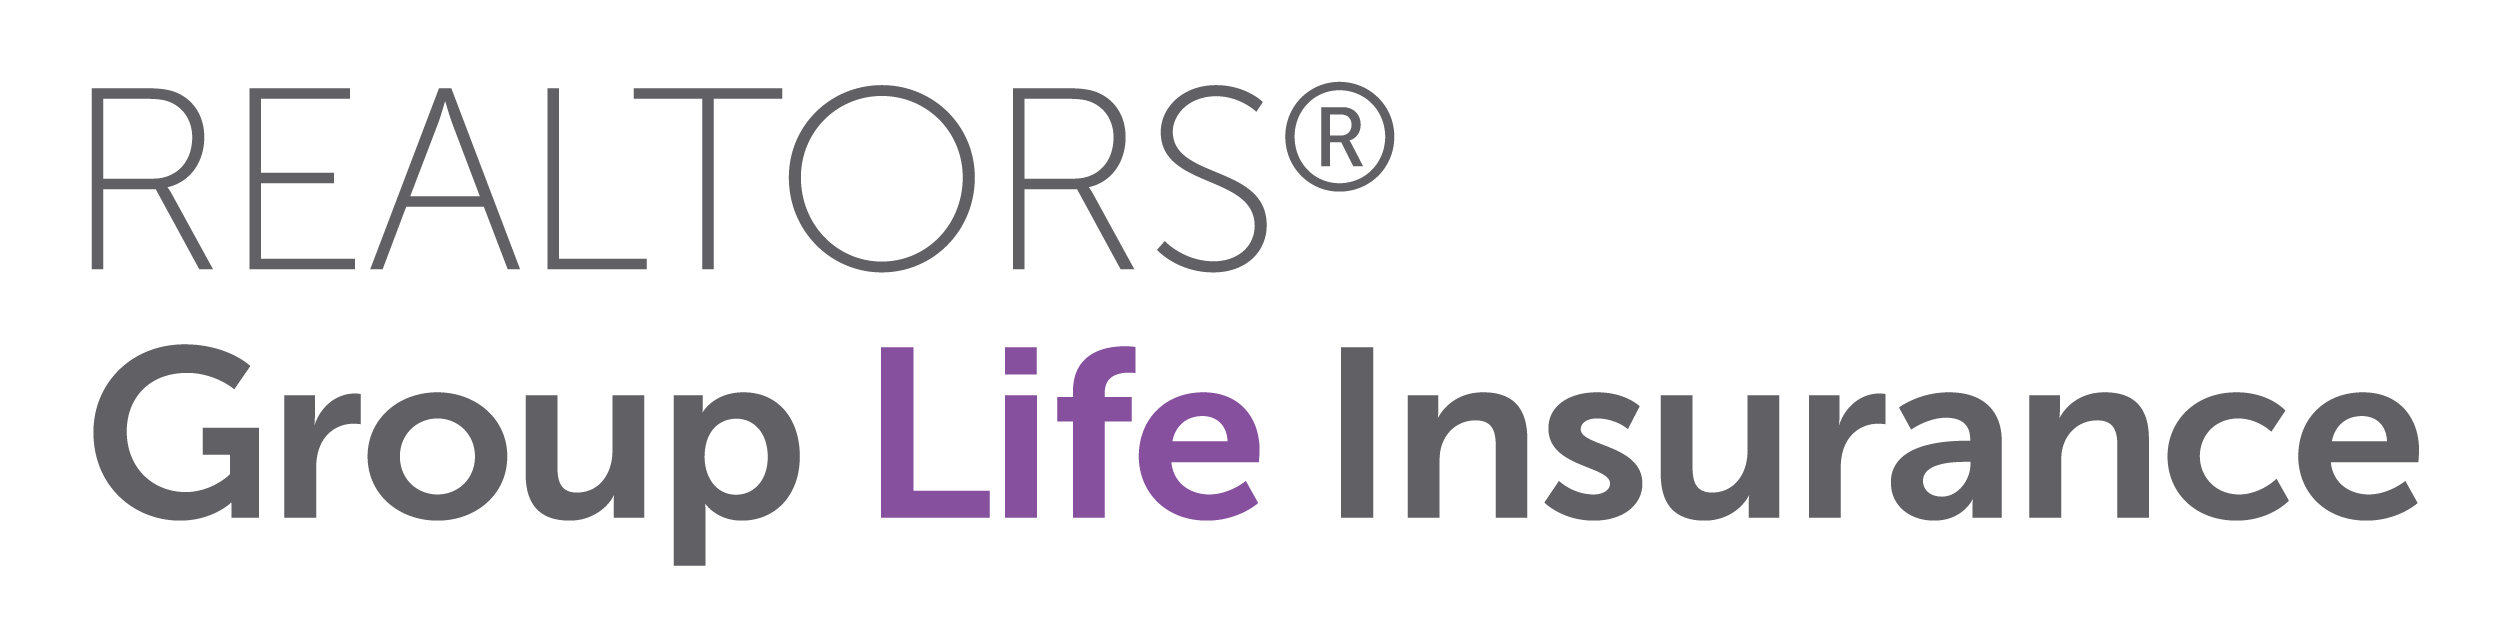 REALTORS® Group Life Insurance